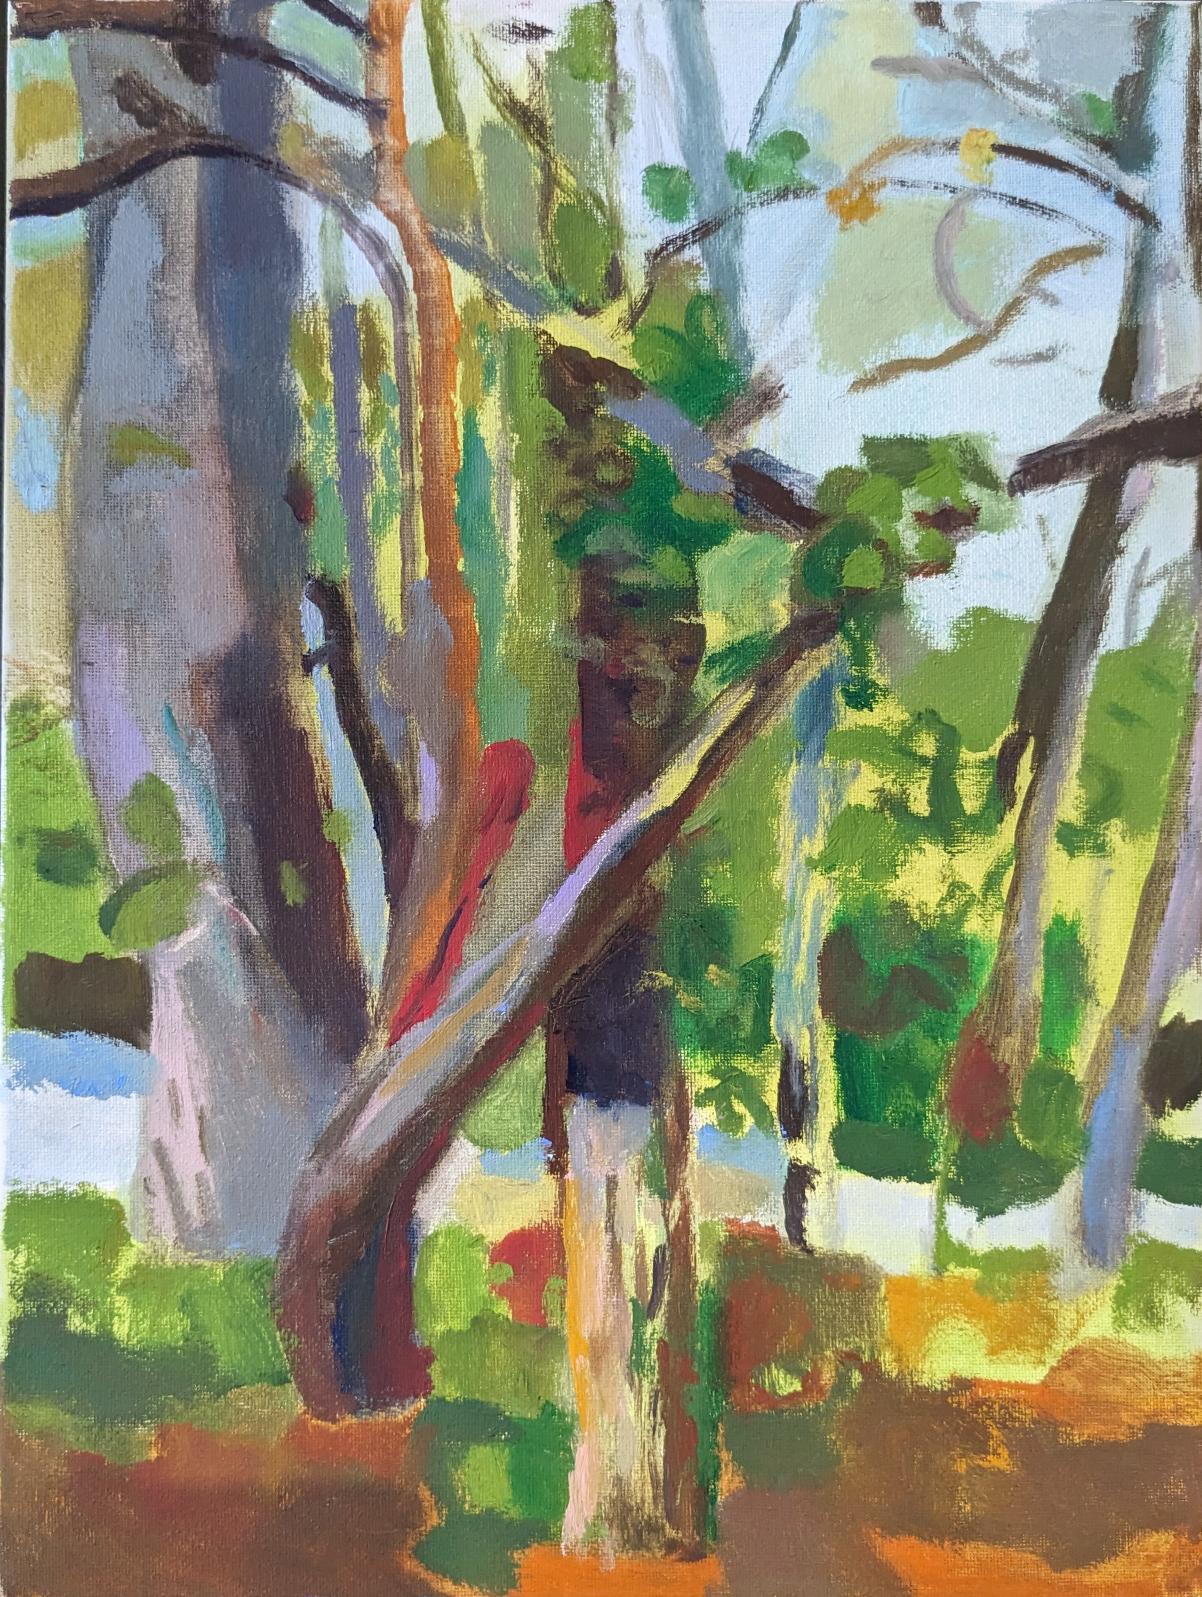 A plein air painting of trees by Karen Harrod